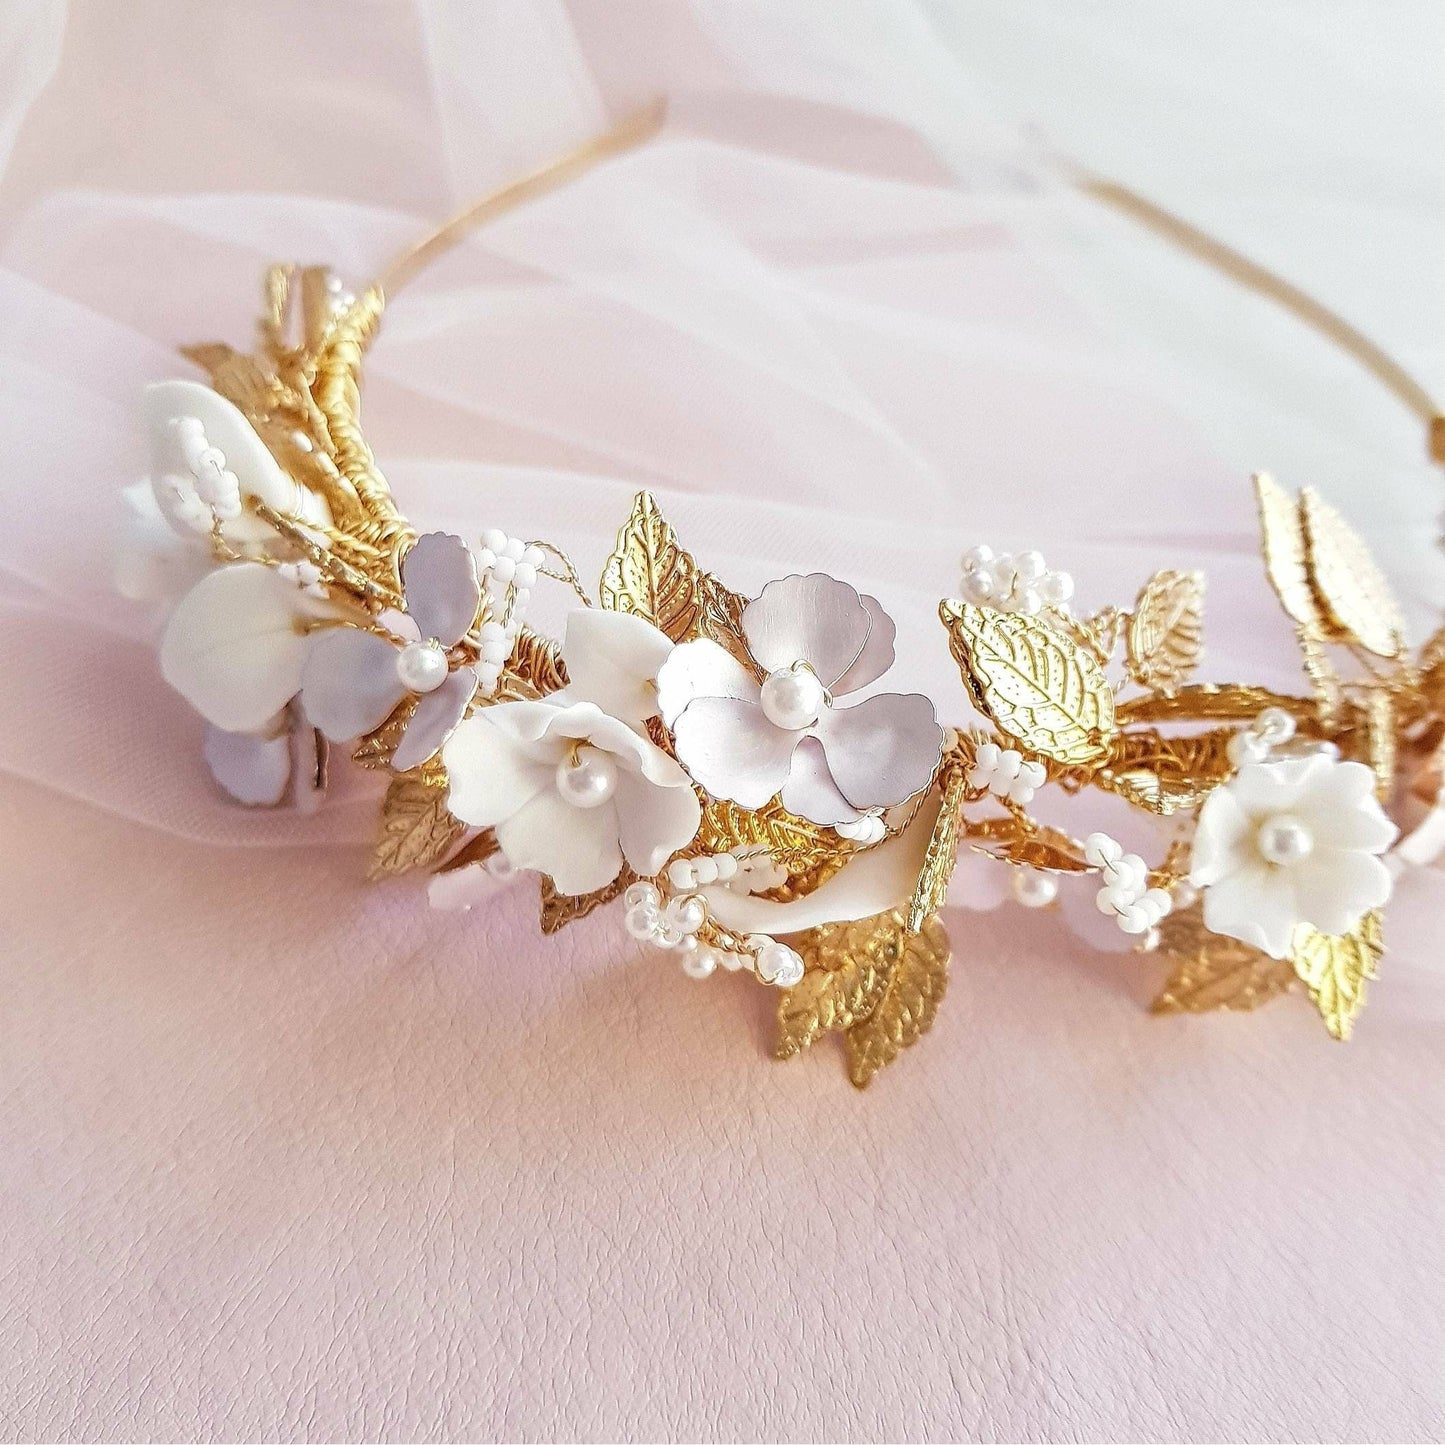 FLEURIT Headband wedding bridal headpiece flowers and leaves hair accessories gold white bead tiaras Australia headpieces FOTF millinery